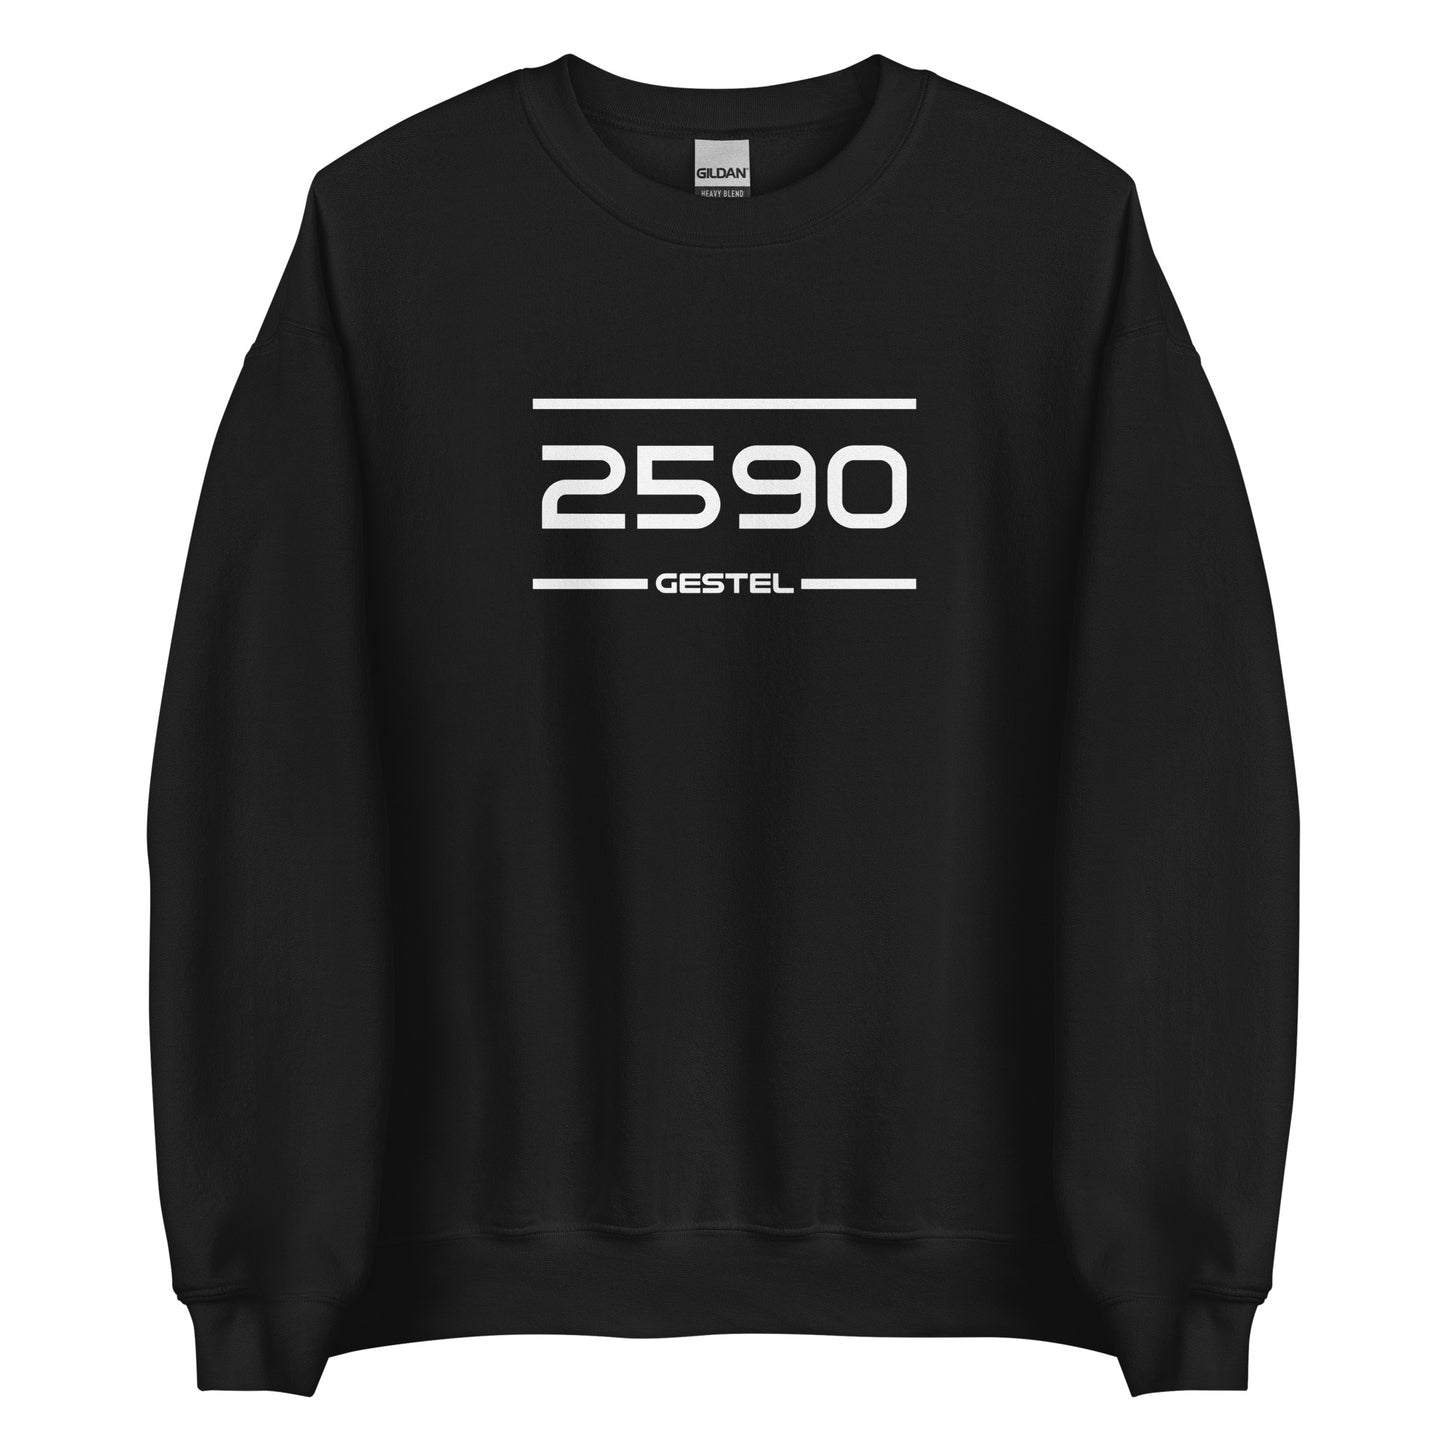 Sweater - 2590 - Gestel (M/V)